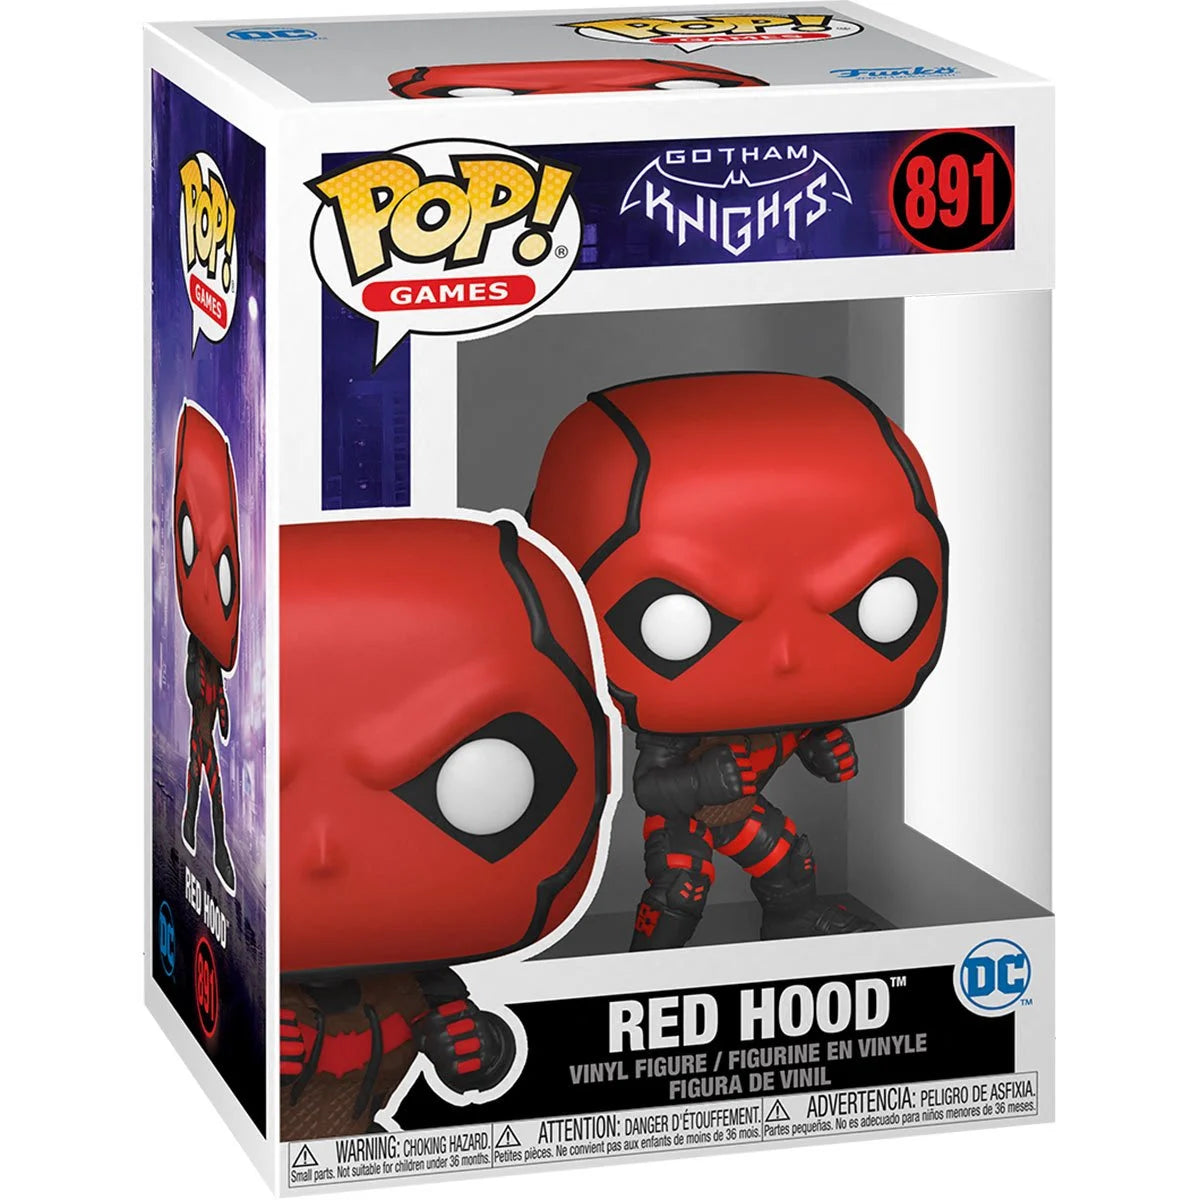 Batman: Gotham Knights Red Hood Pop! Vinyl Figure in a box - heretoserveyou